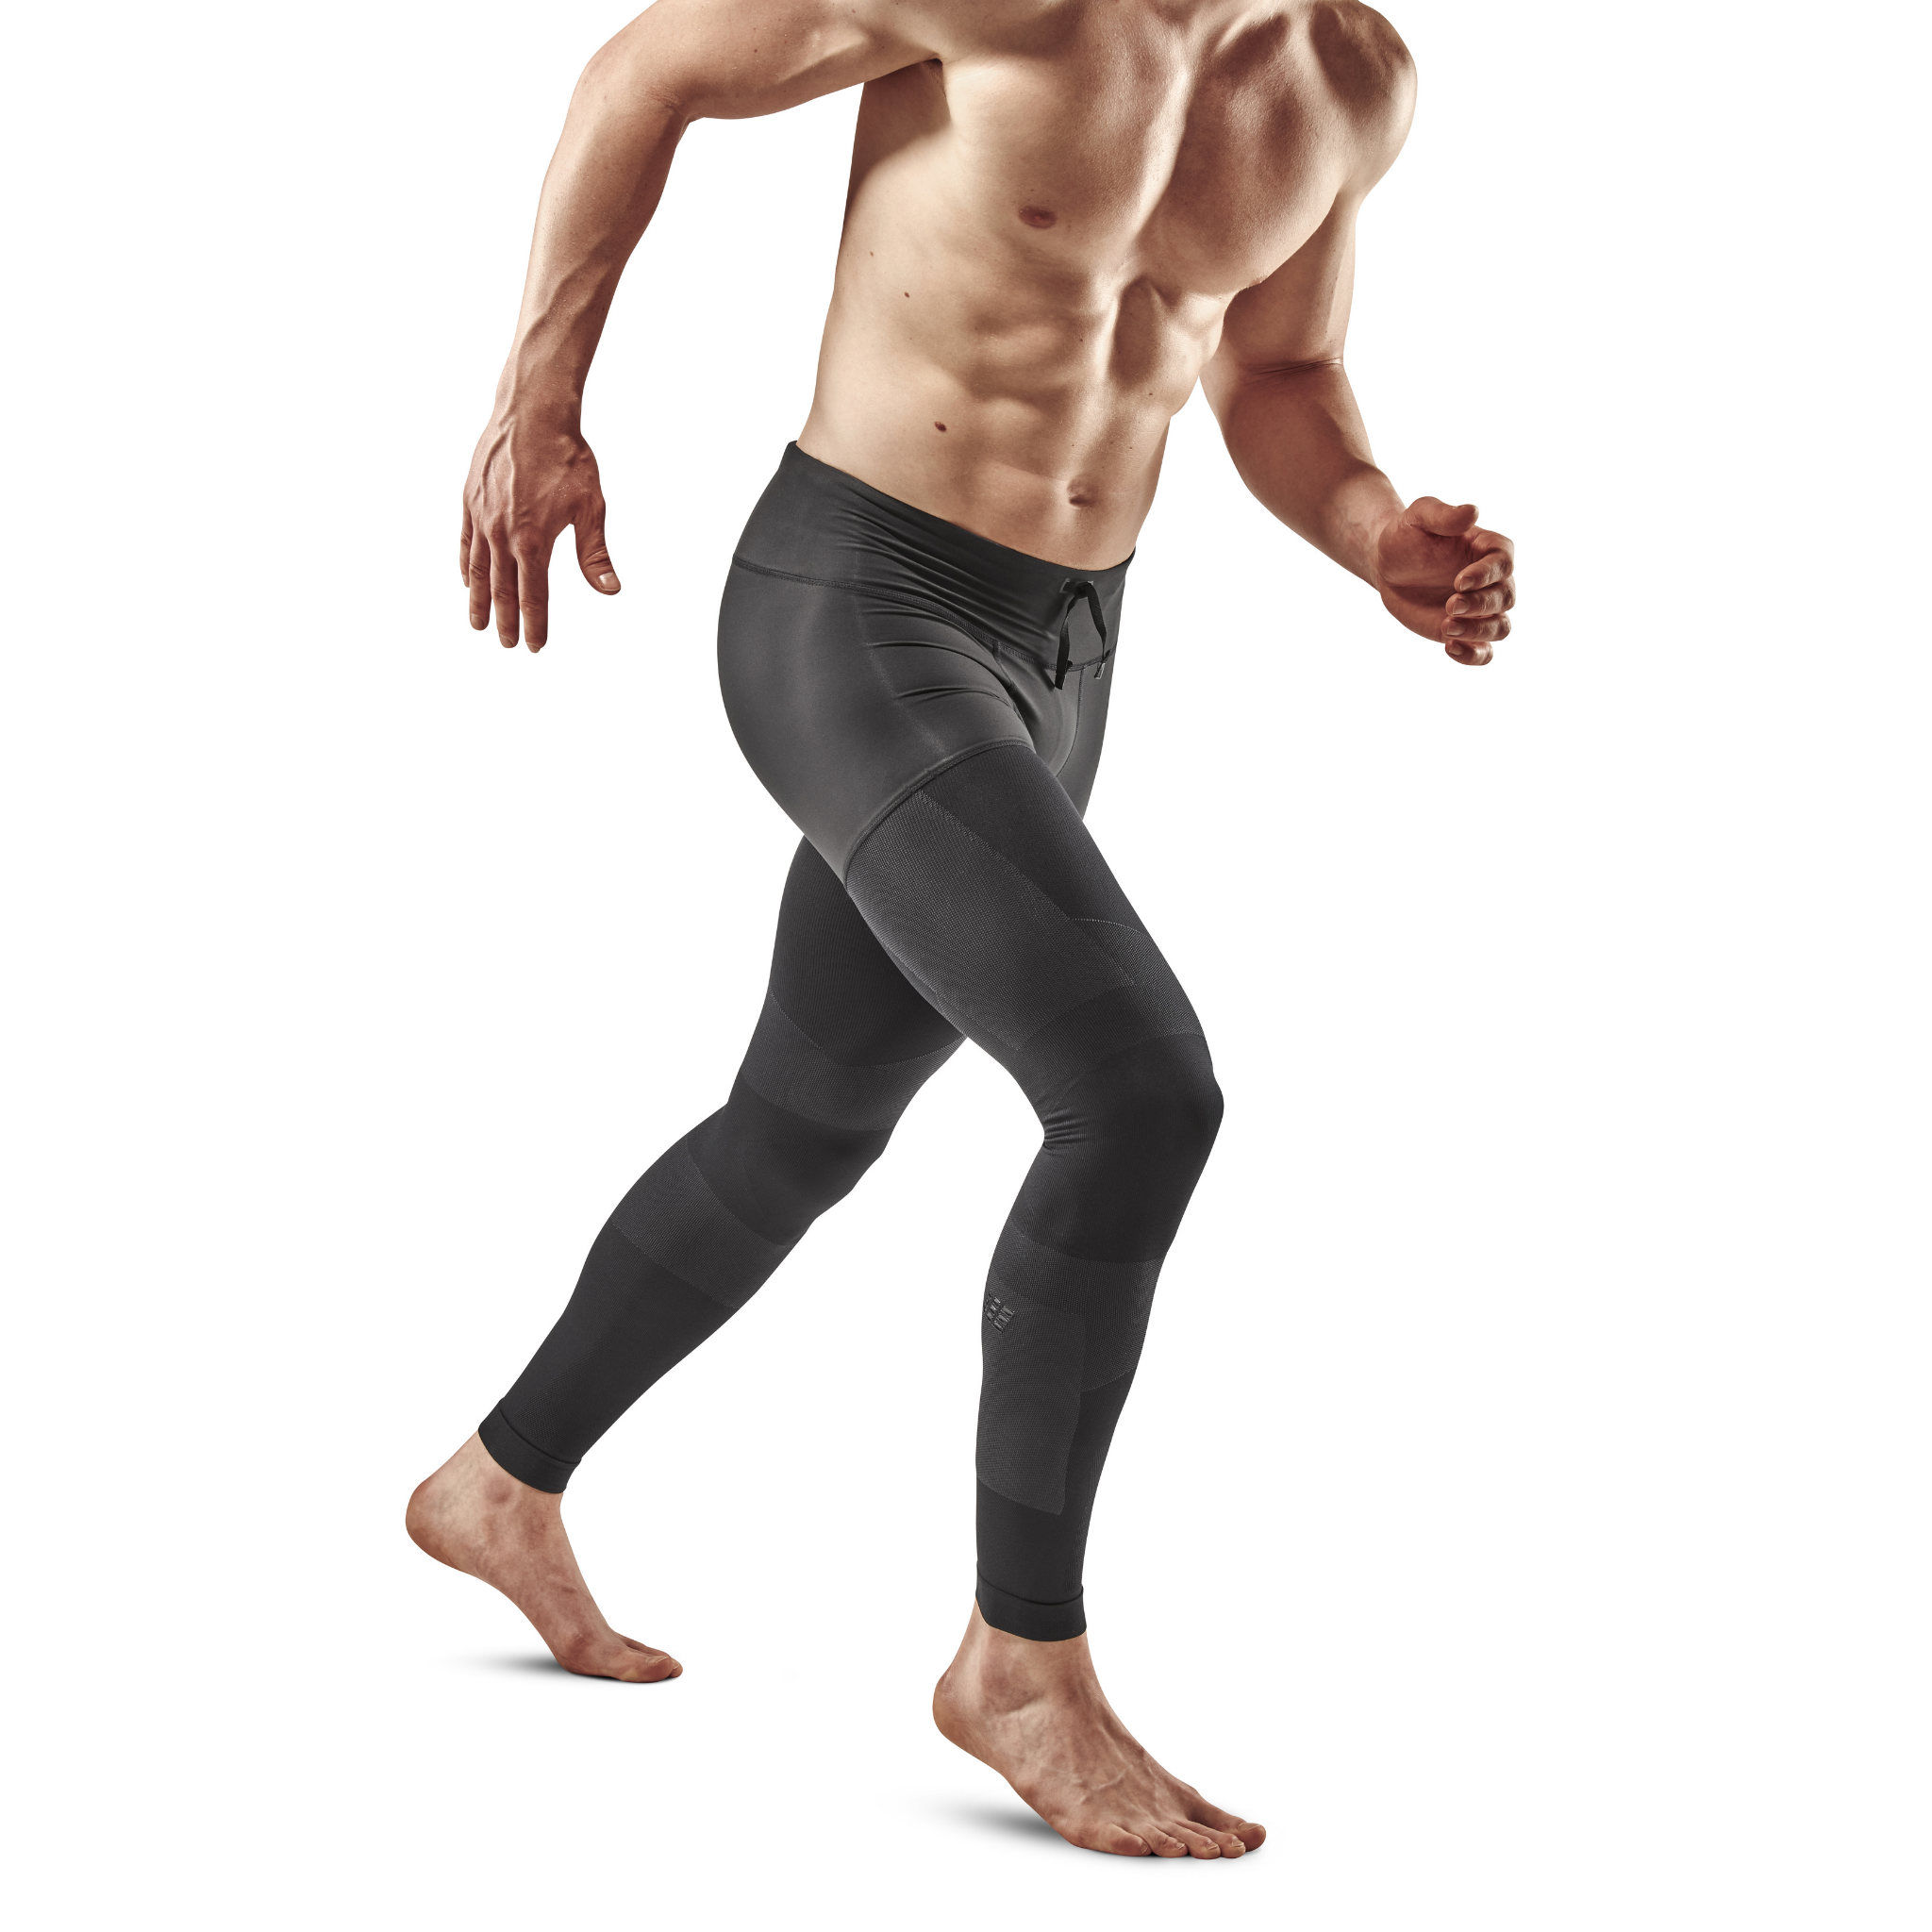 ¾Tight pants Compression Pants Training Men Long Pants Running